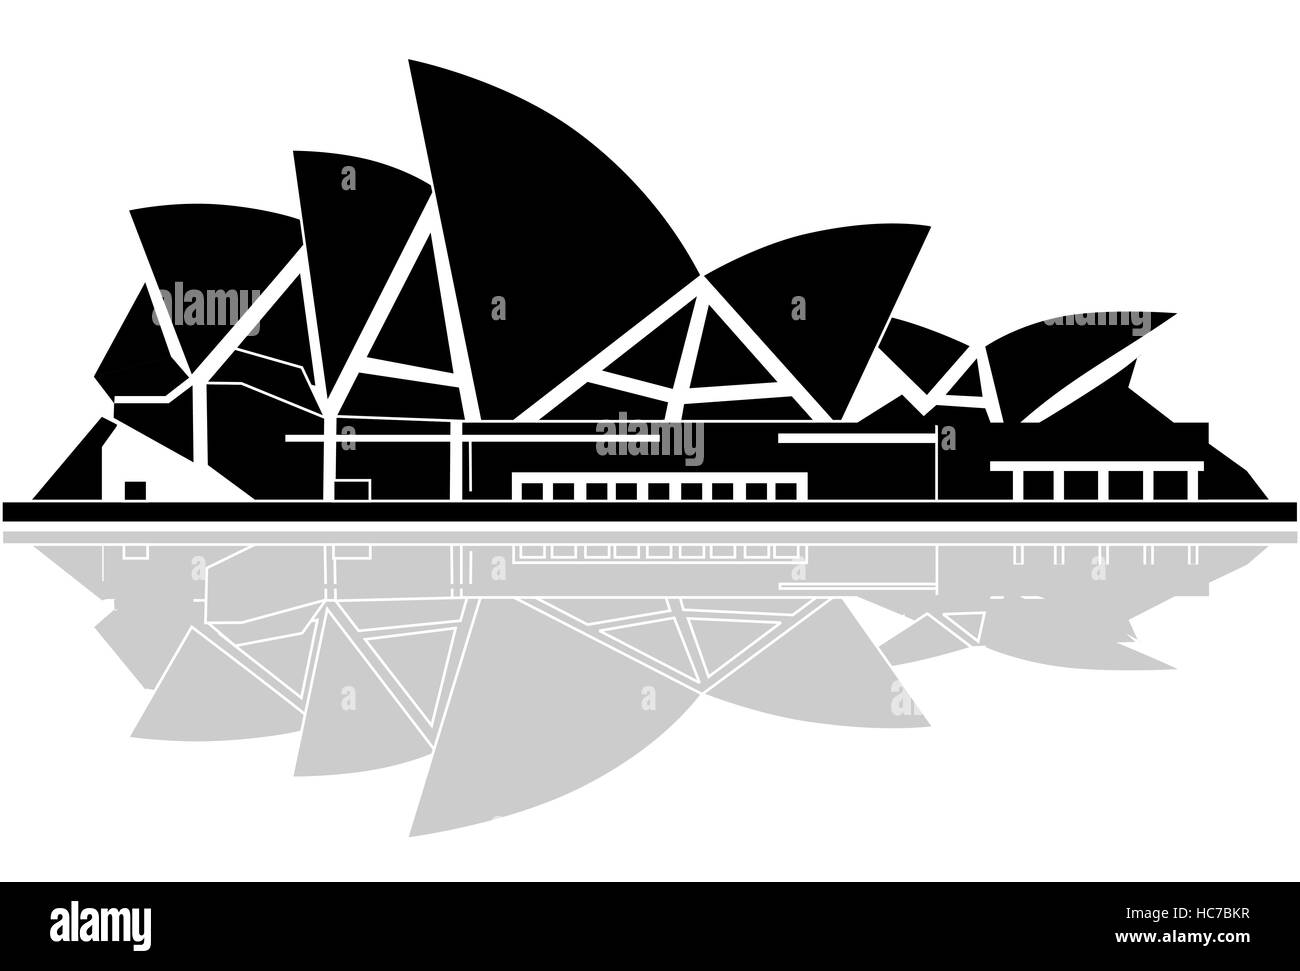 Sydney Opera House, Australia Stock Photo